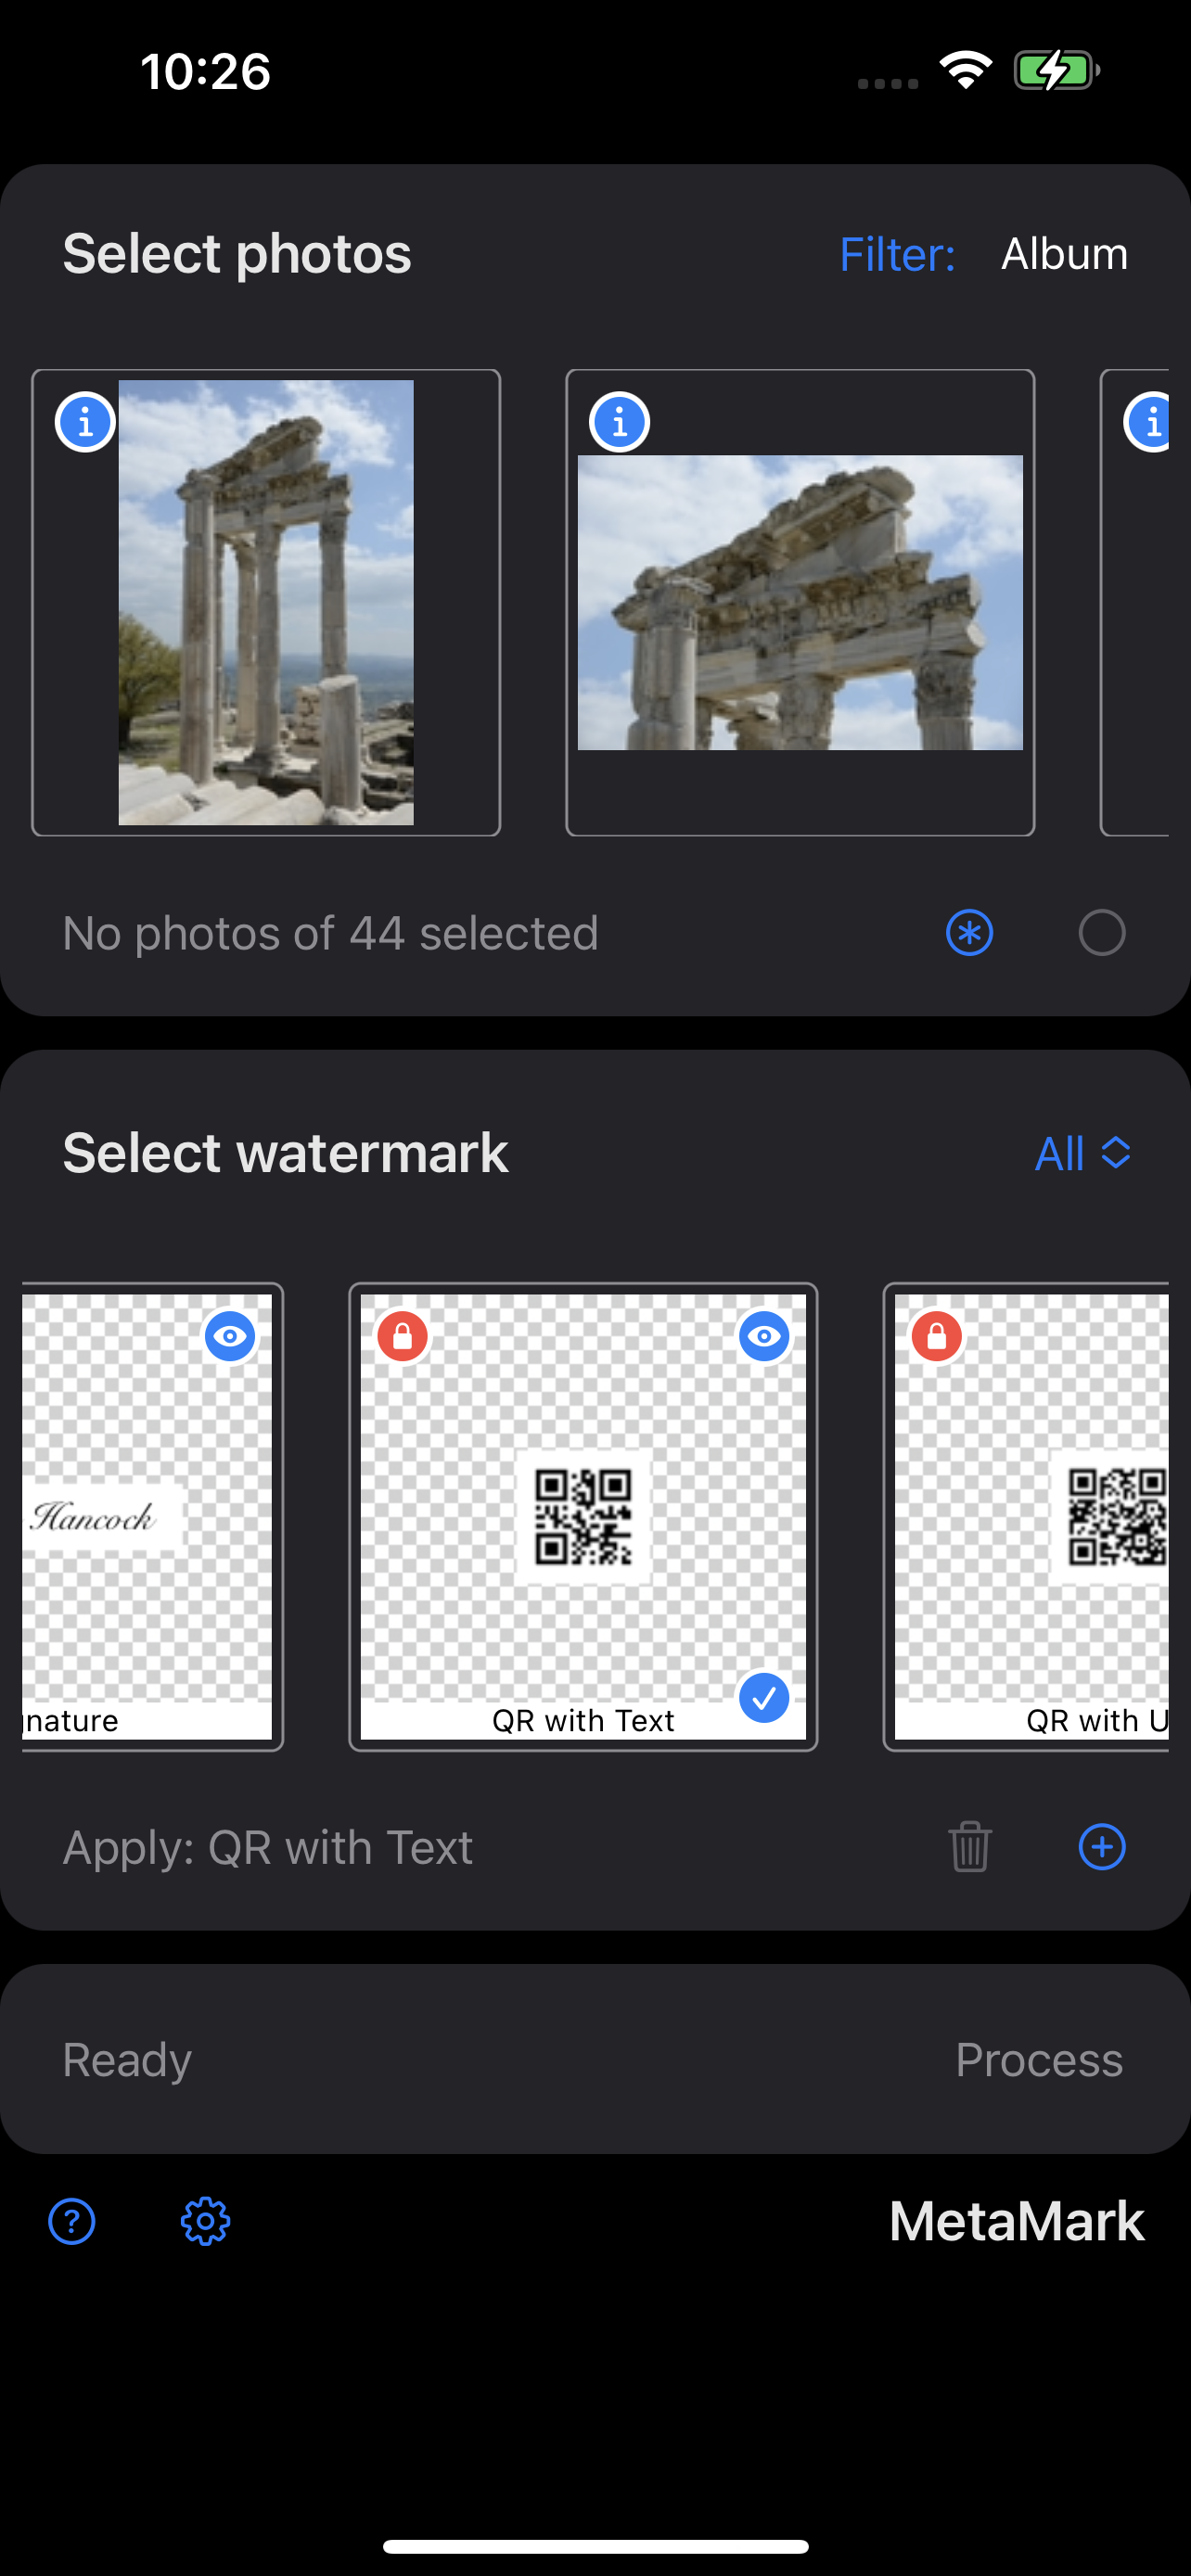 MetaMark Watermark Photos on iPhone Select Album